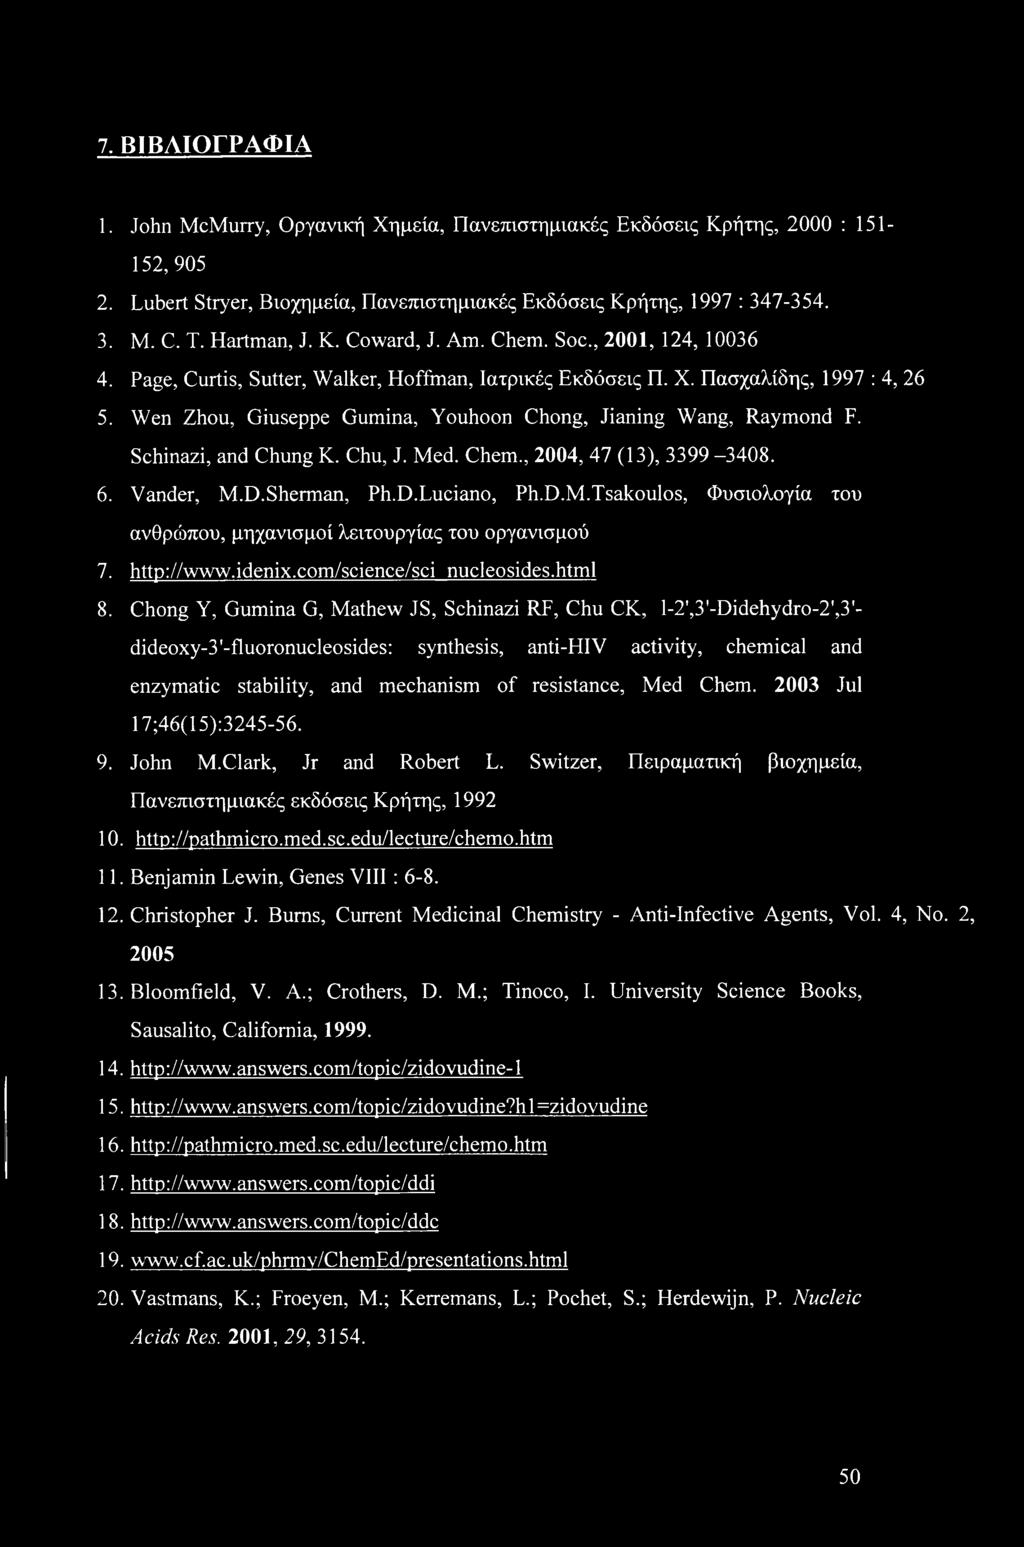 Wen Zhou, Giuseppe Gumina, Youhoon Chong, Jianing Wang, Raymond F. Schinazi, and Chung K. Chu, J. Med. Chem., 2004, 47 (13), 3399-3408. 6. Vander, M.D.Sherman, Ph.D.Luciano, Ph.D.M.Tsakoulos, Φυσιολογία του ανθρώπου, μηχανισμοί λειτουργίας του οργανισμού 7.